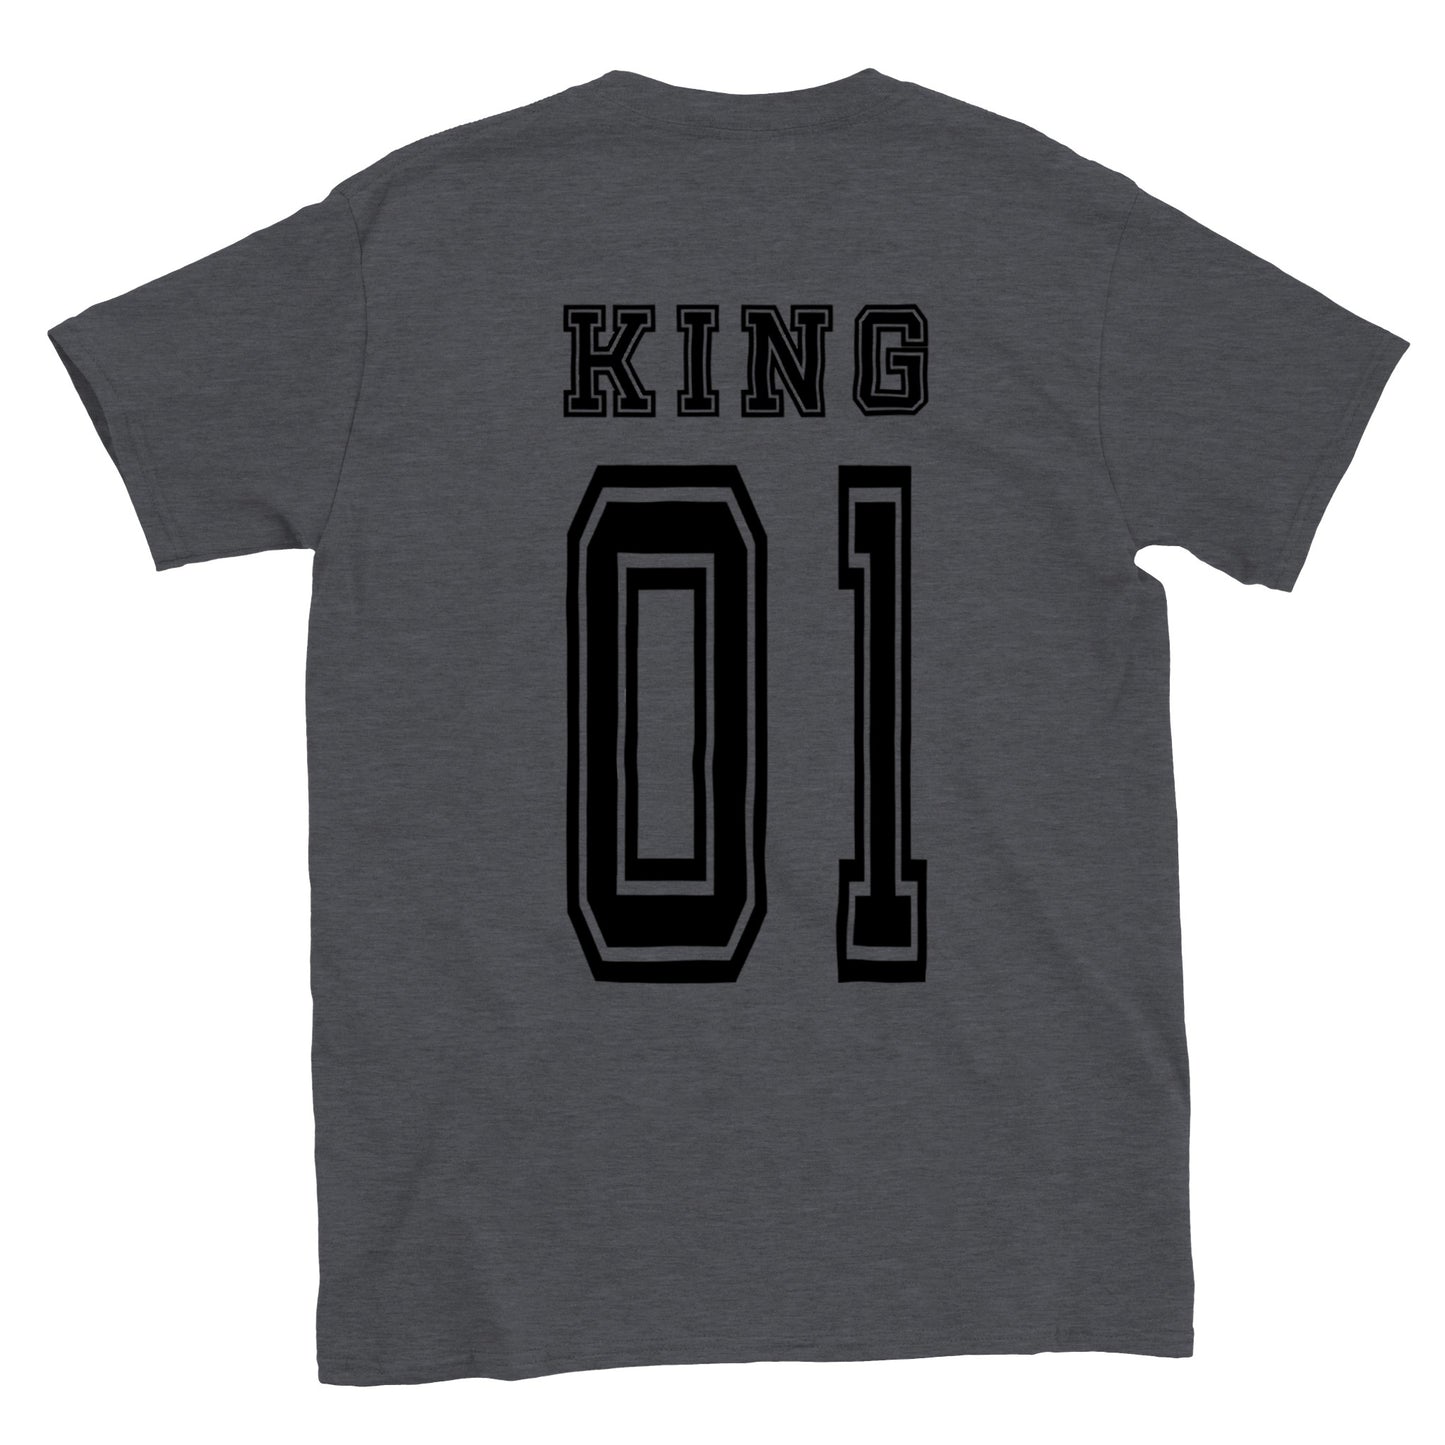 King 01 T-shirt